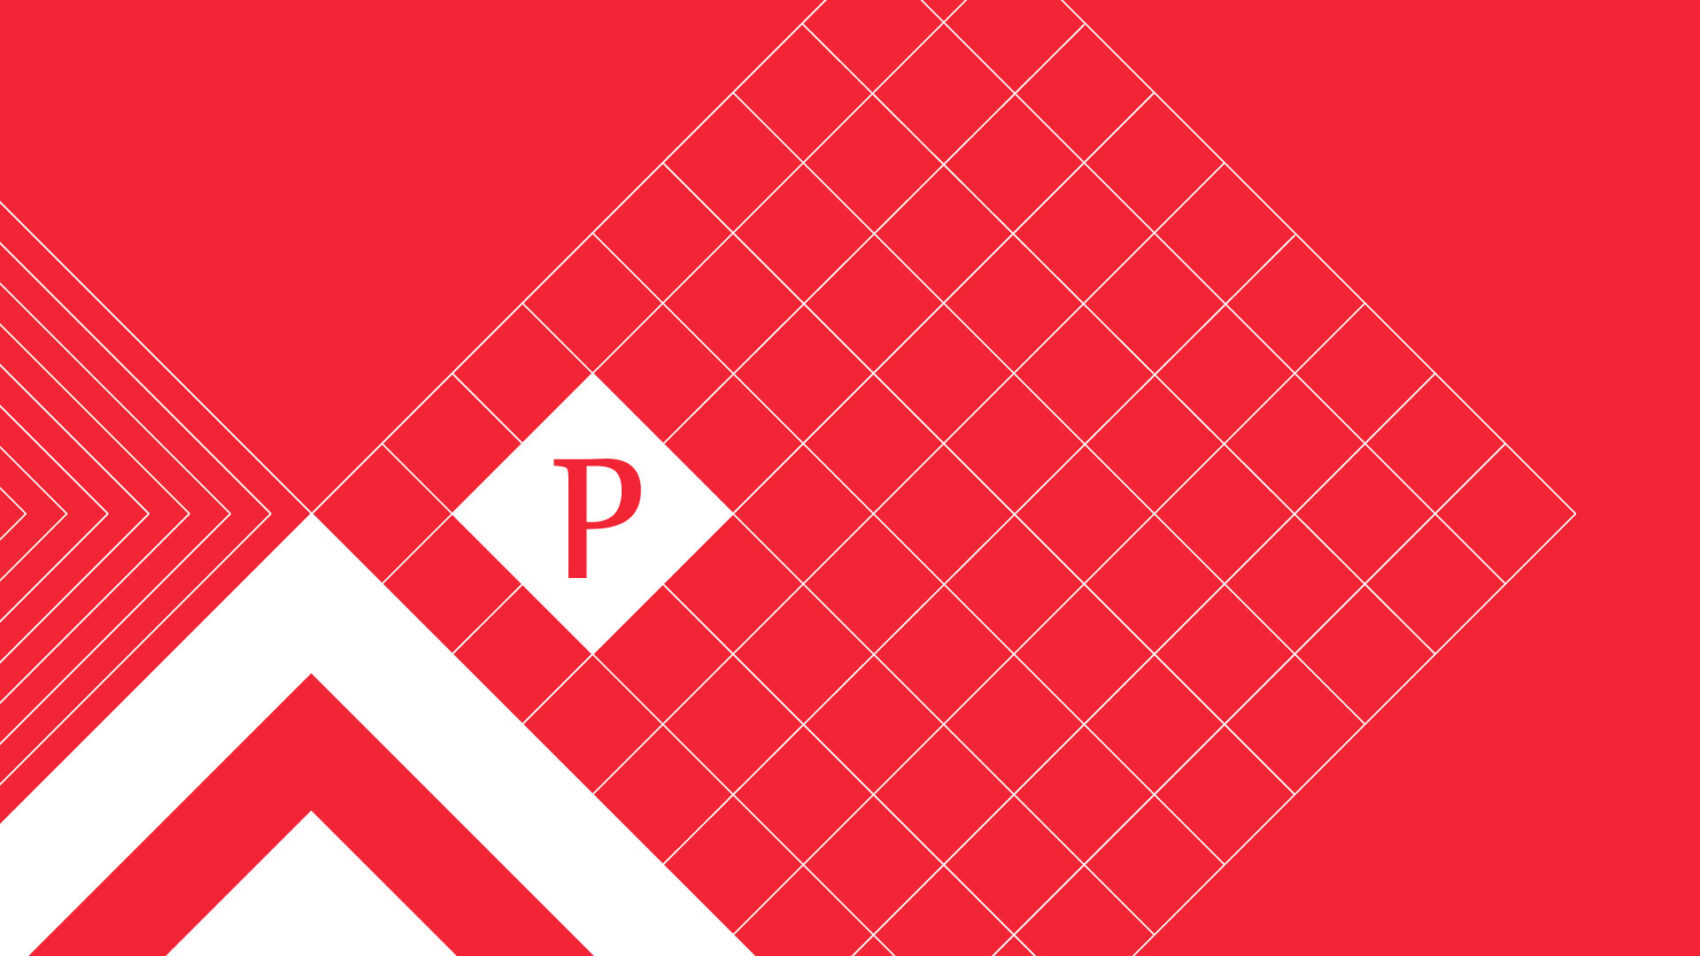 Penlon rebrand and repositioning image